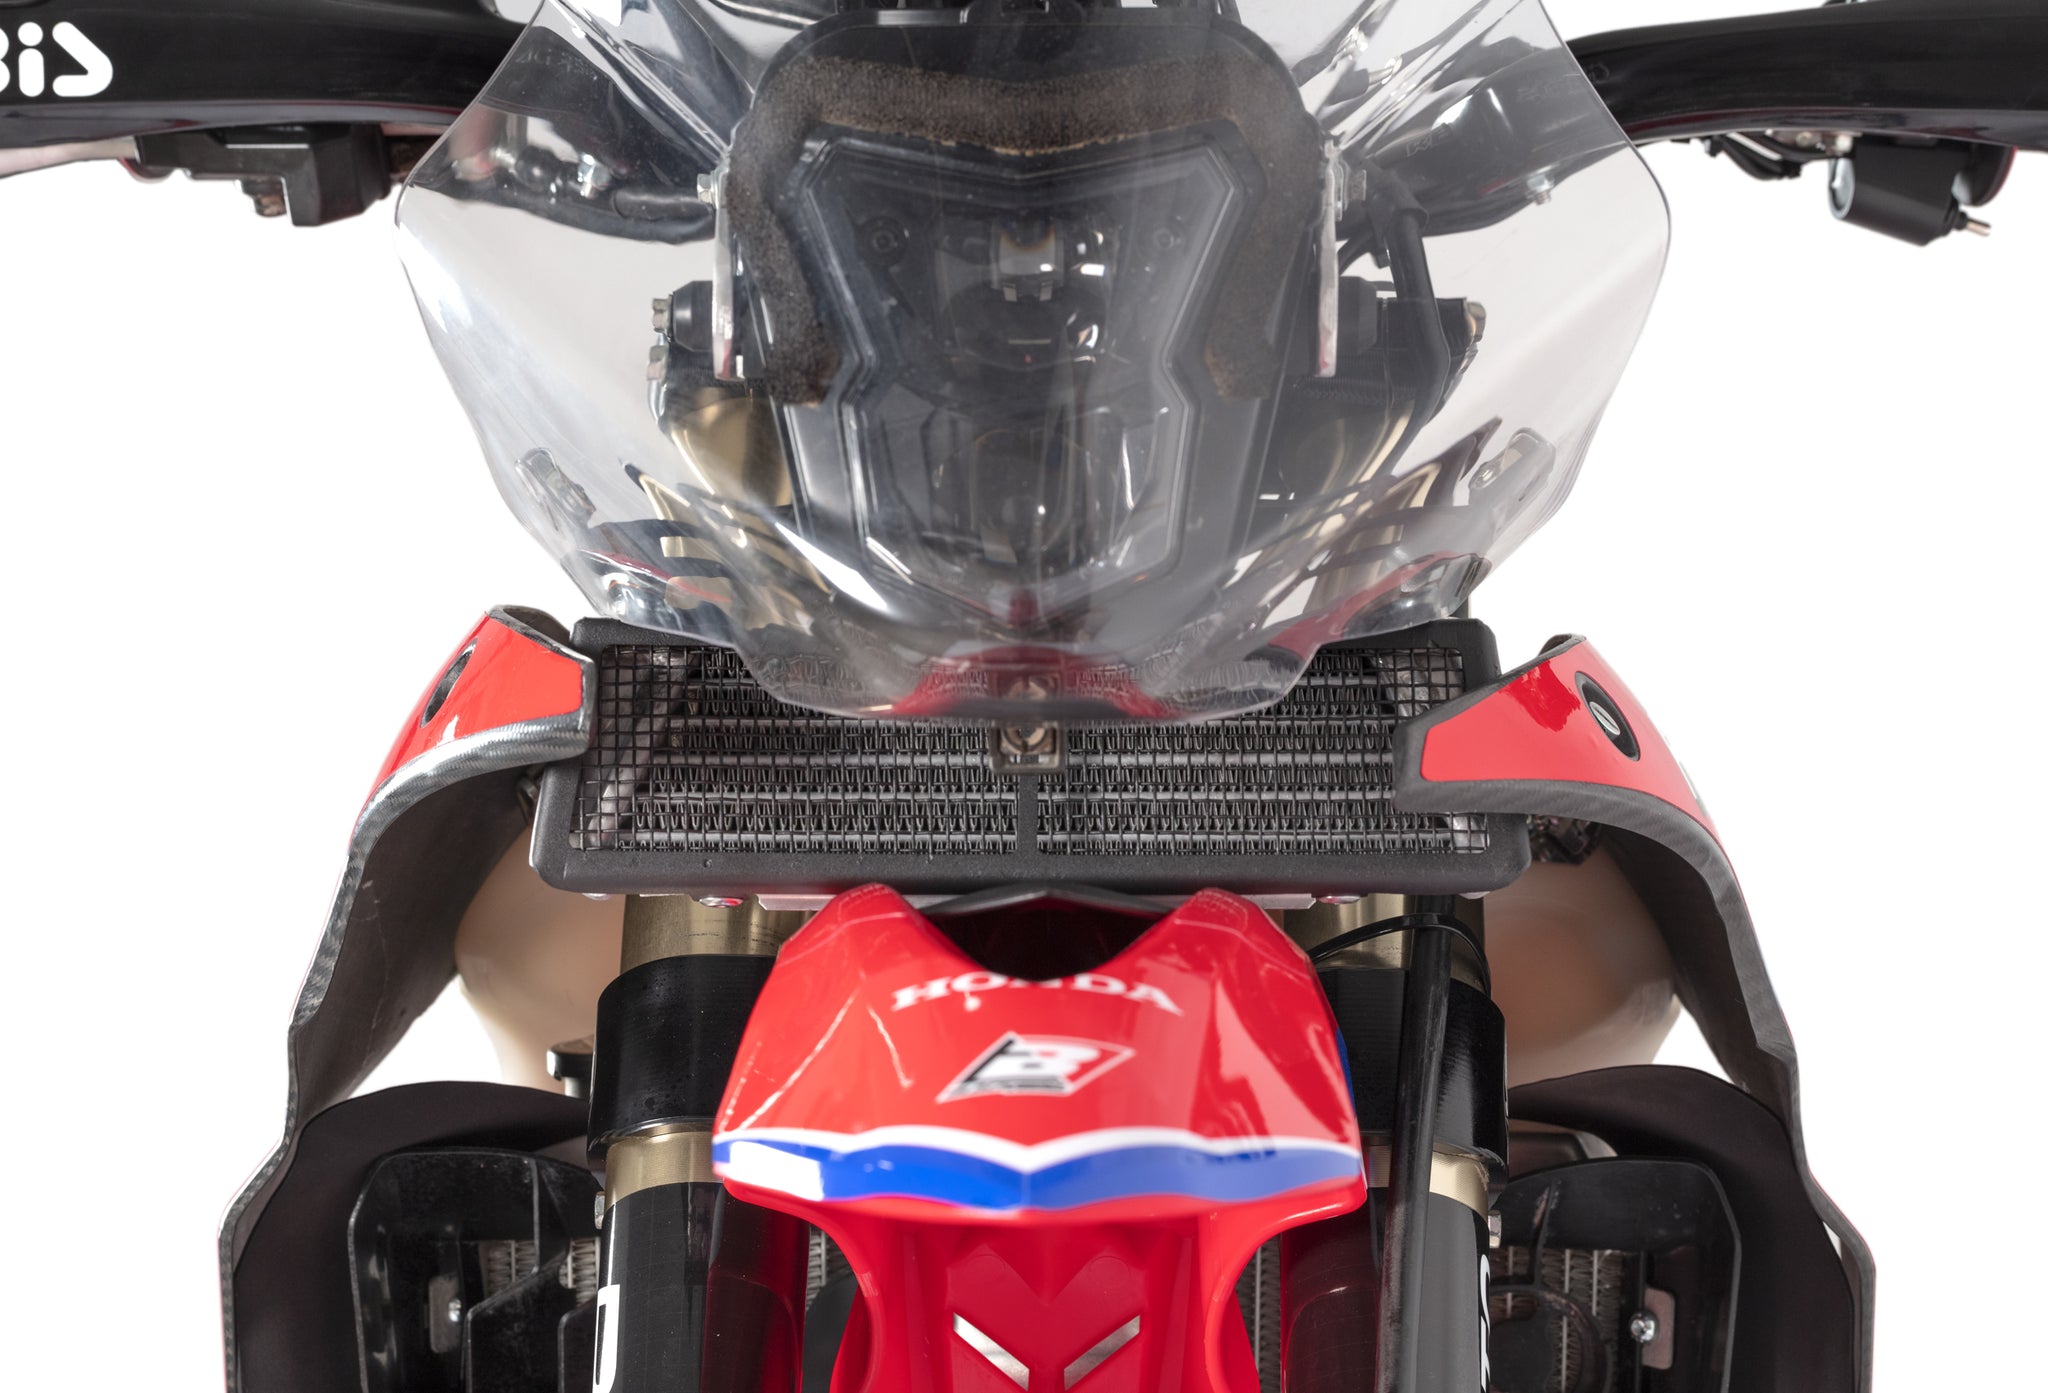 RS Moto Rally Kit for Honda CRF 450l